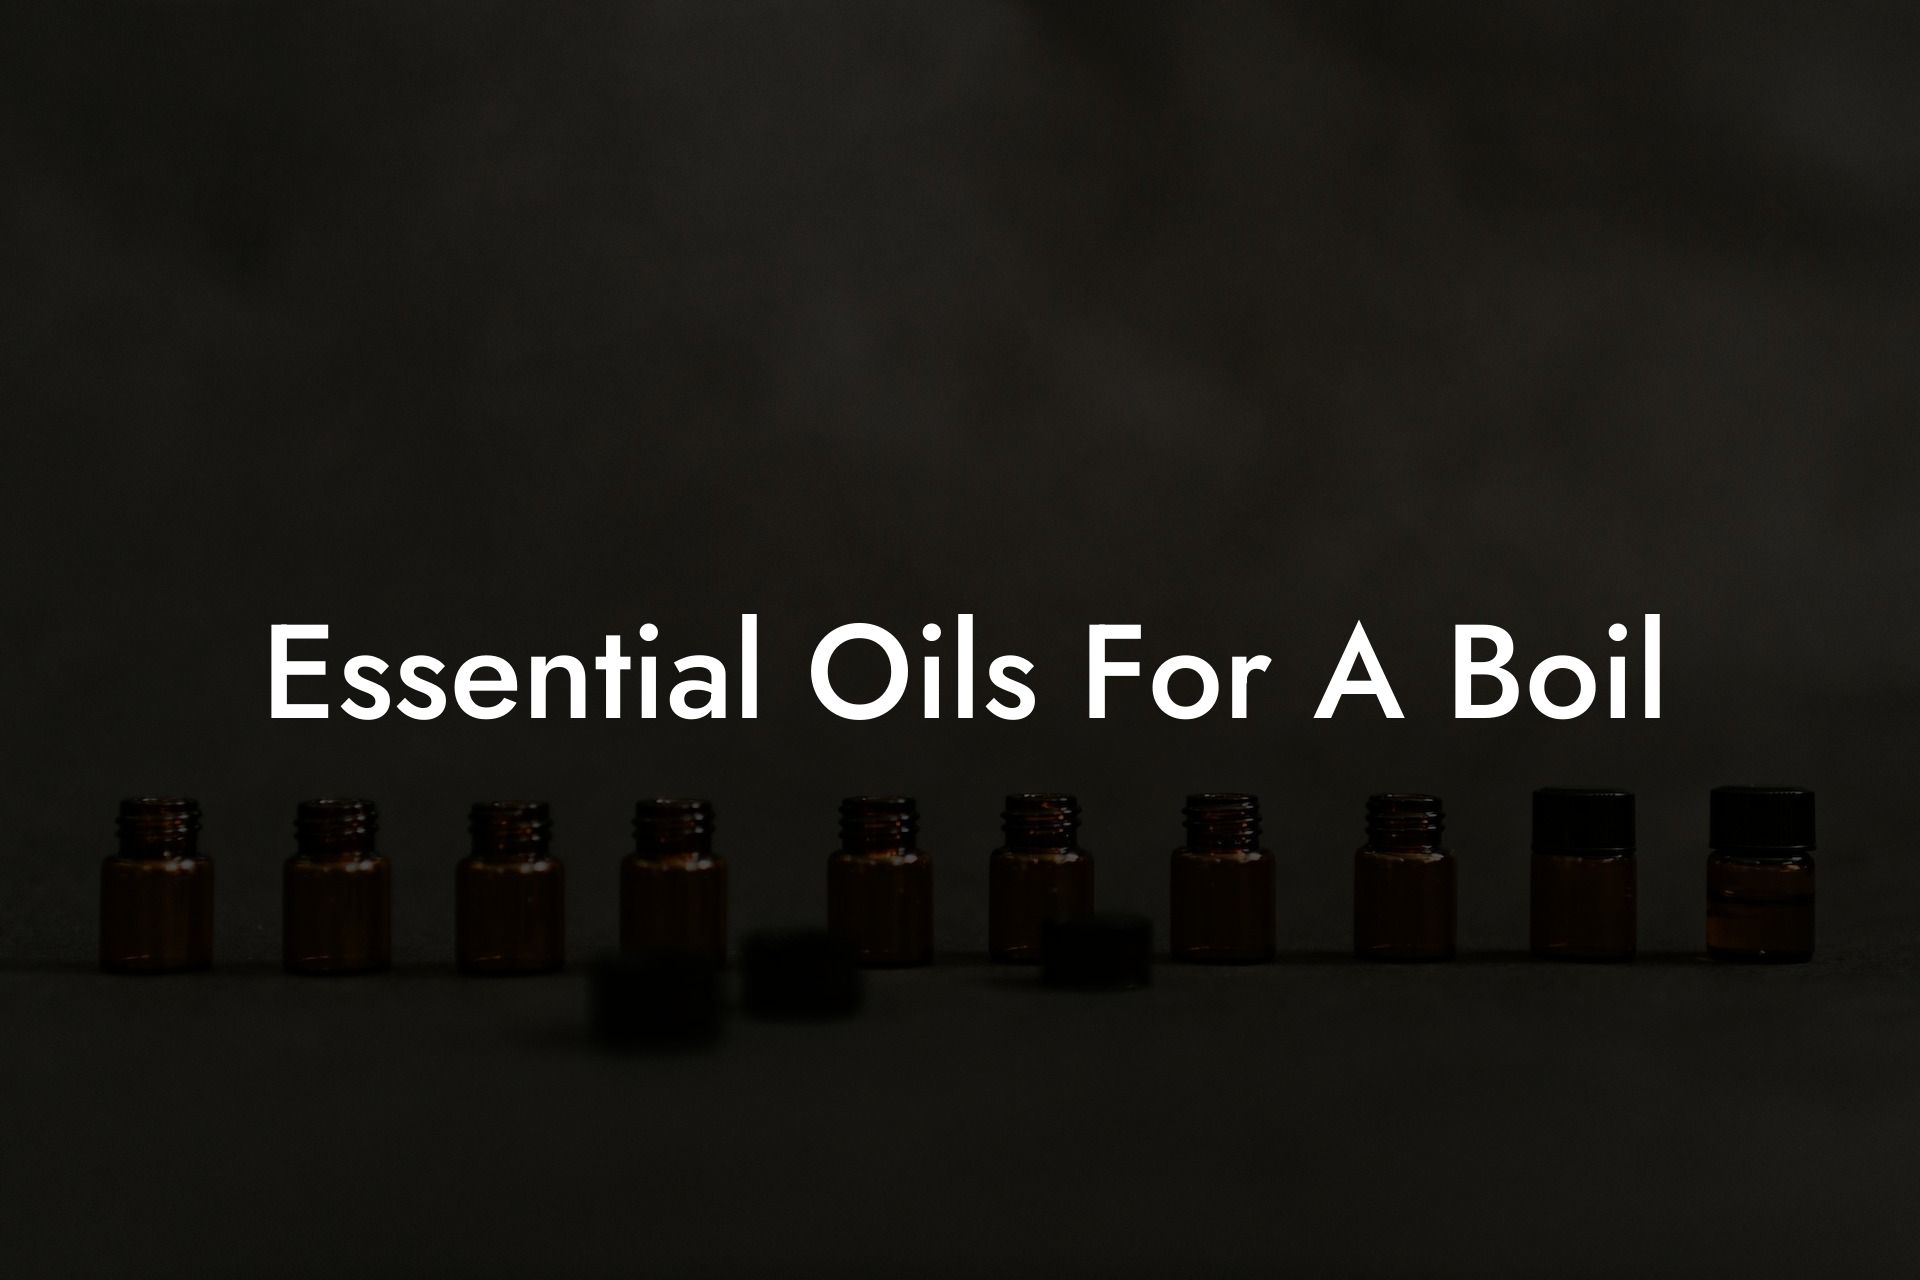 Essential Oils For A Boil